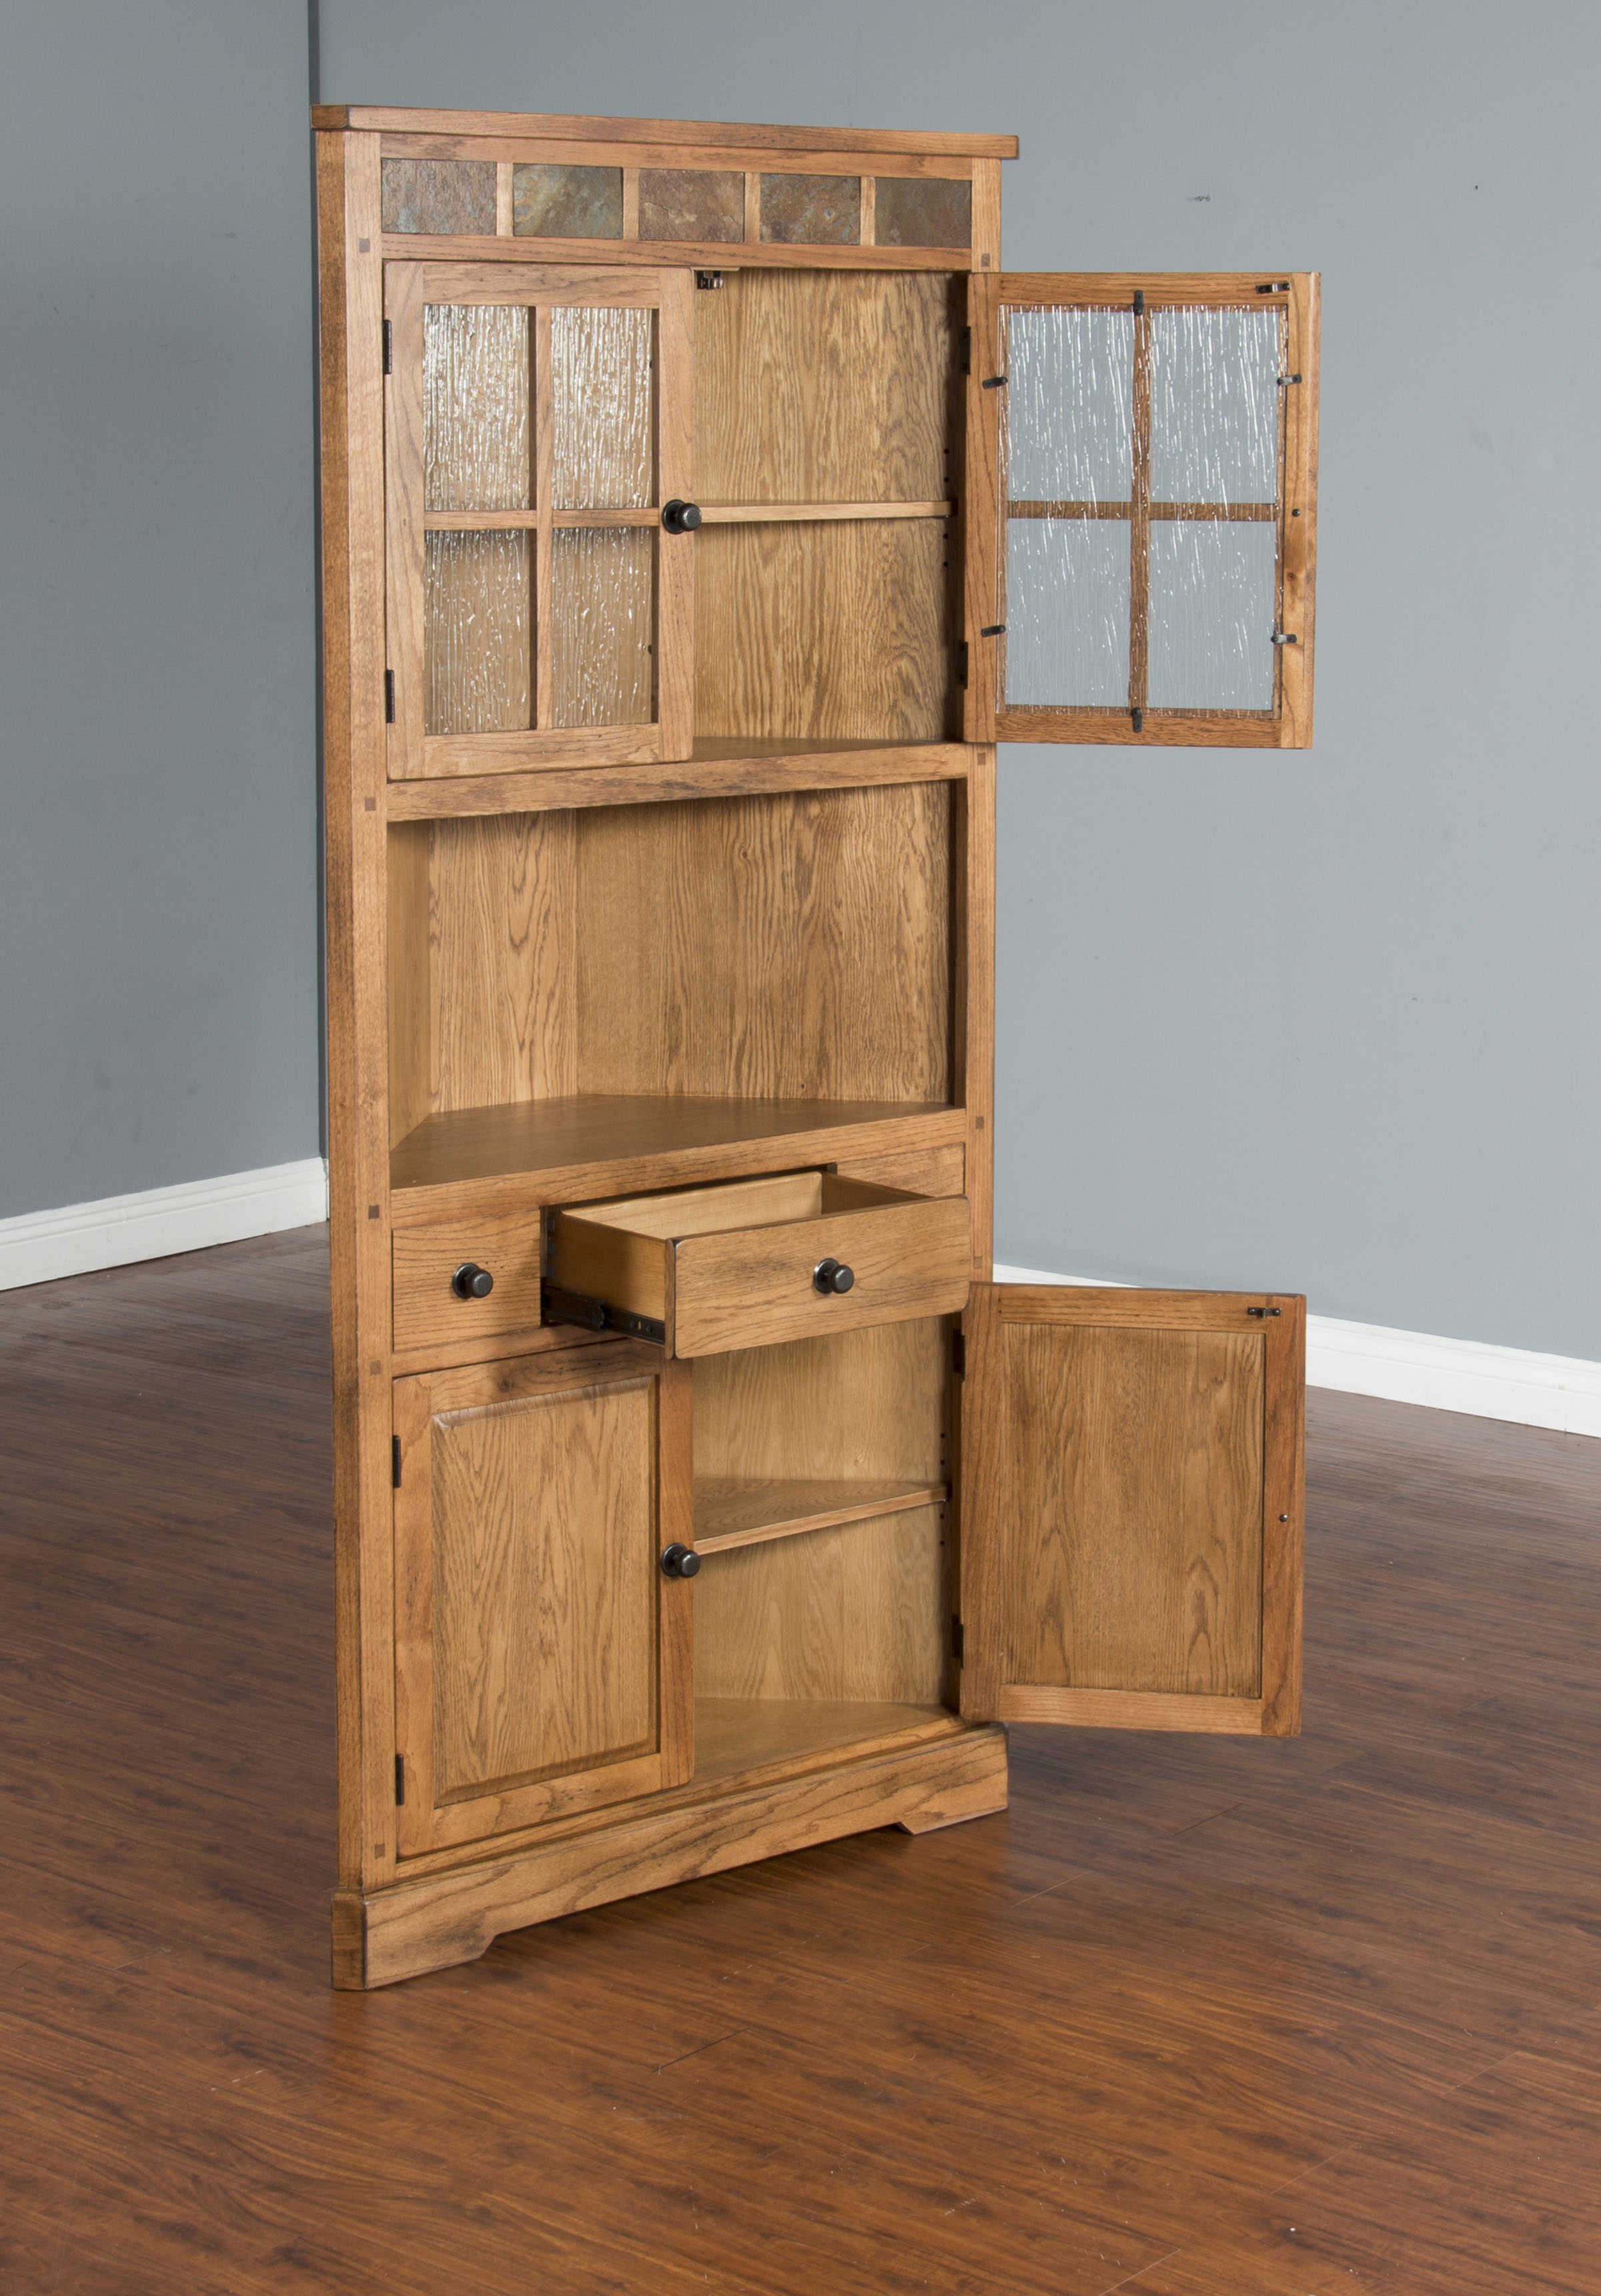 Sunny designs sedona rustic oak corner china cabinet the